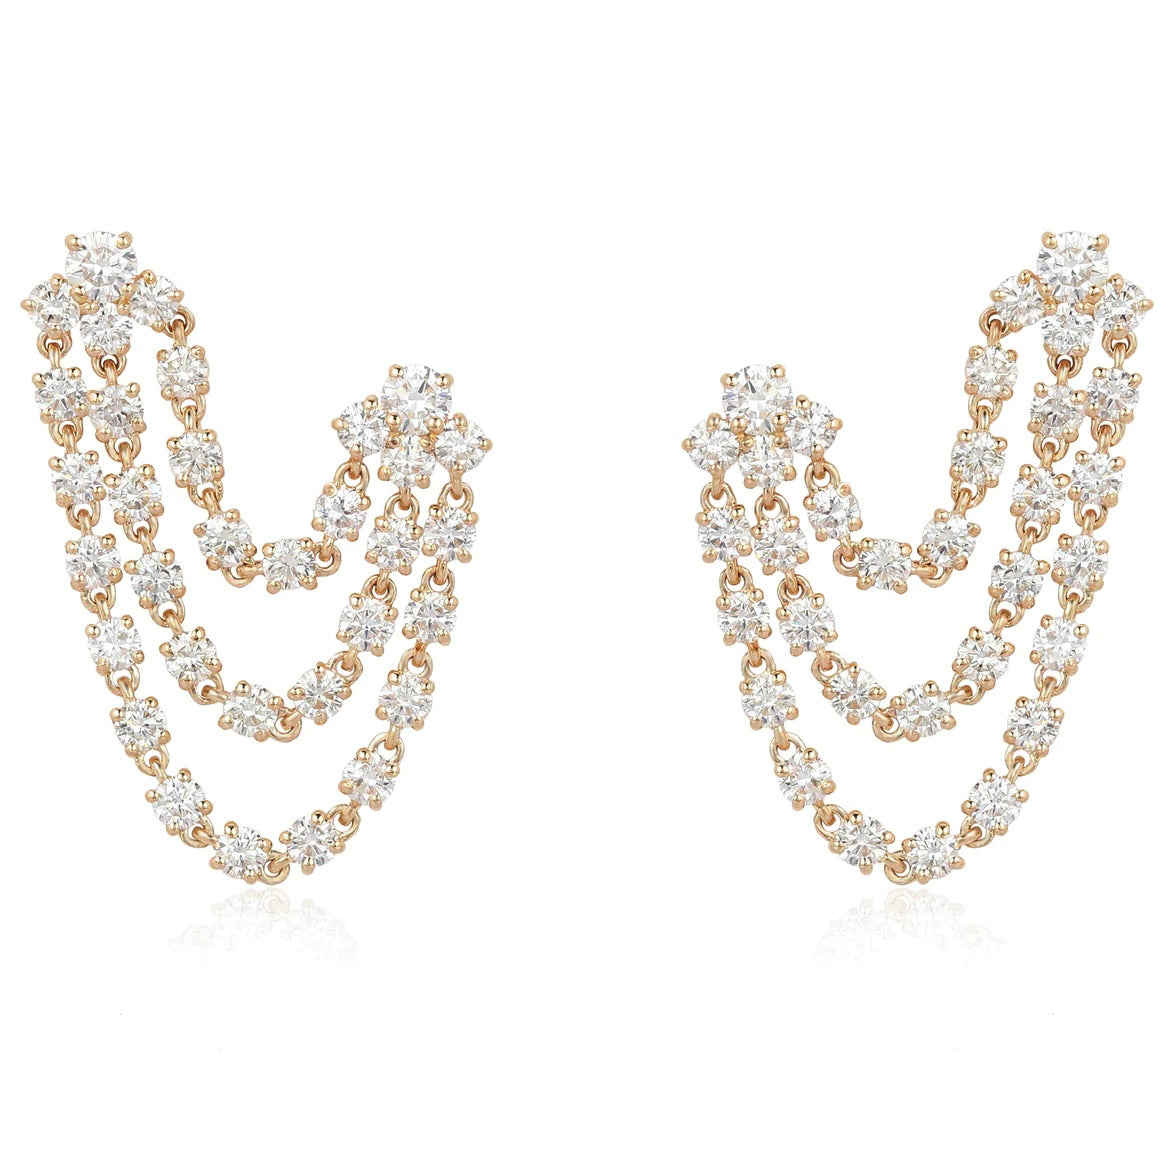 3 Row Diamond Chain Earrings